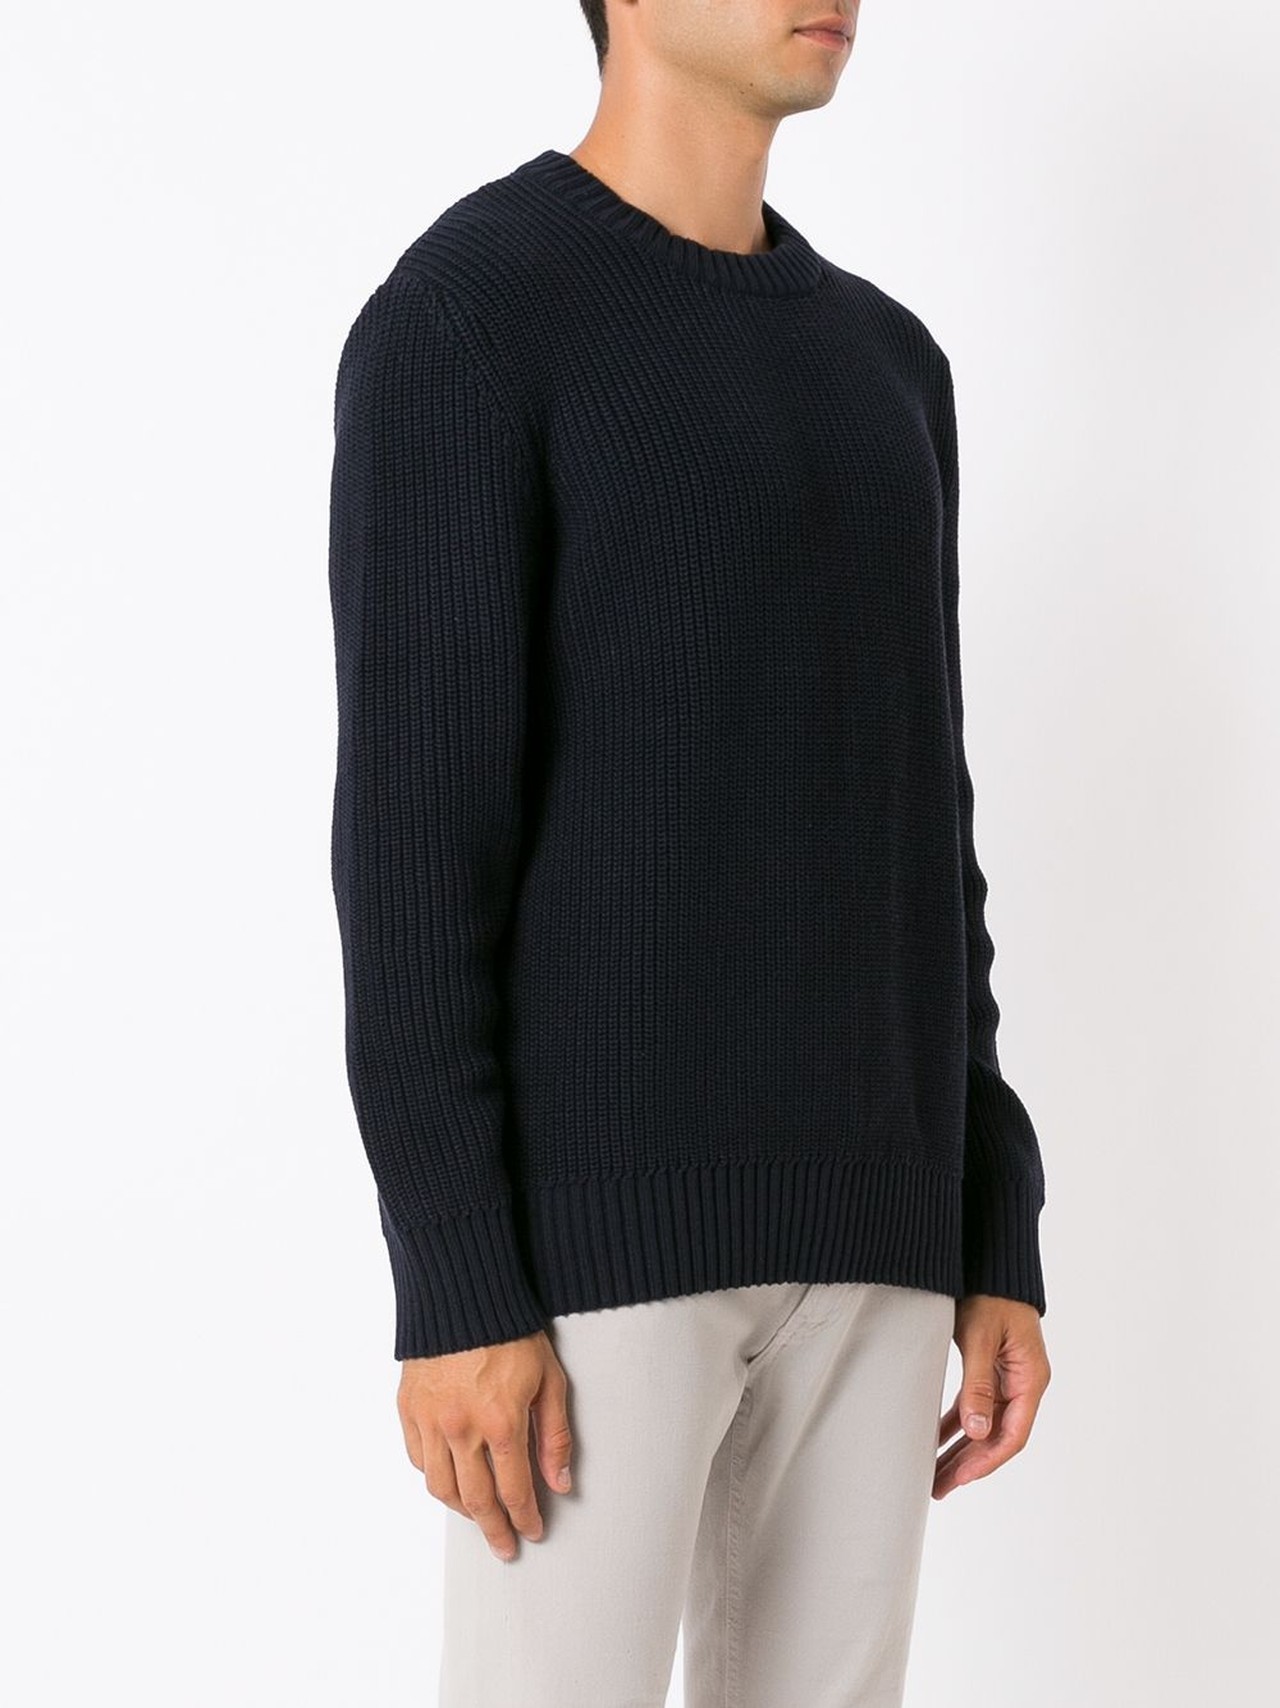 Sweater Gola Careca Tricot